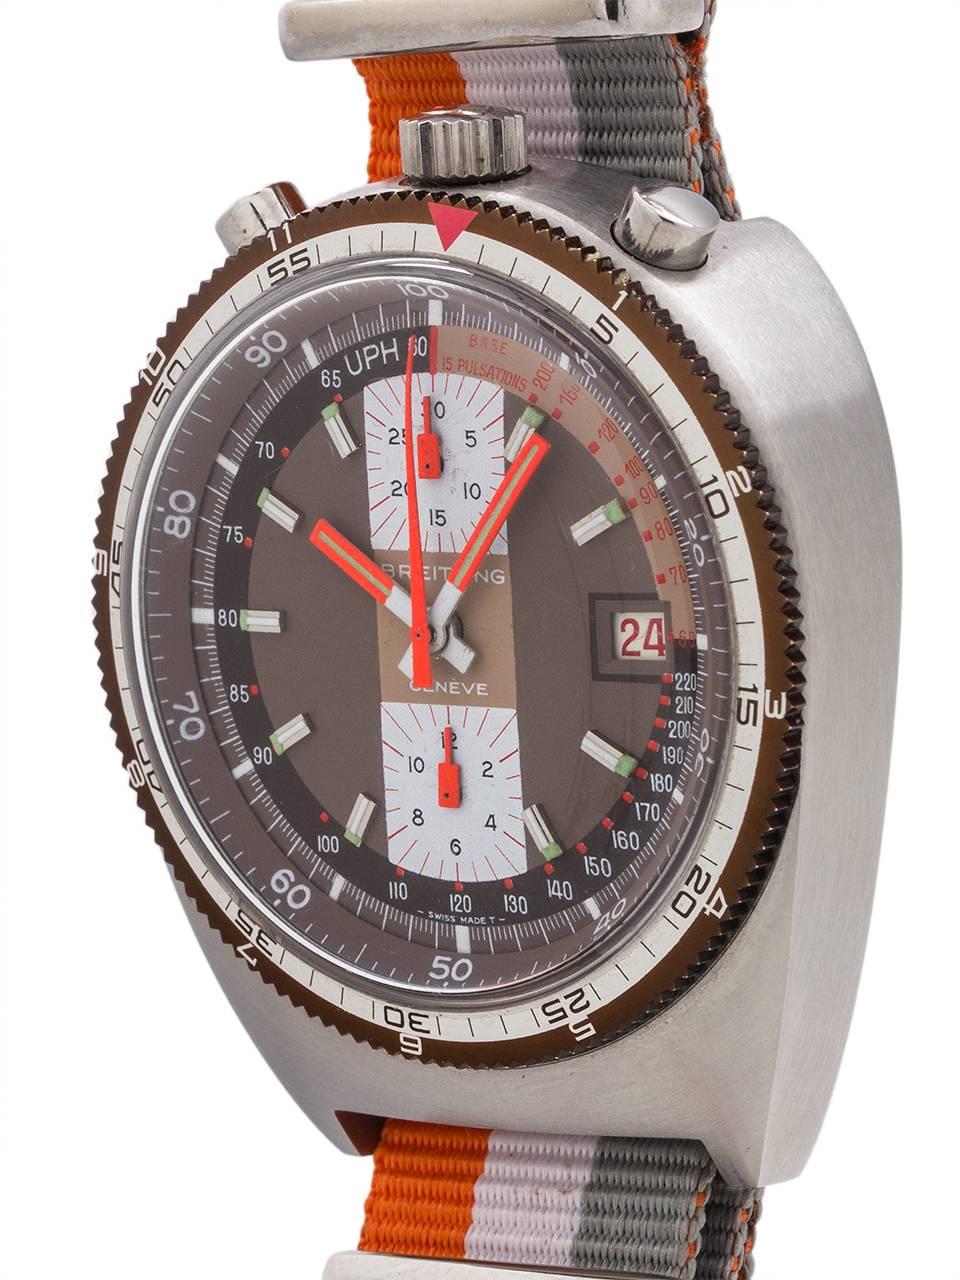 Men's Breitling Stainless Steel Bullhead “Pupitre” Chronograph Wristwatch, circa 1970s